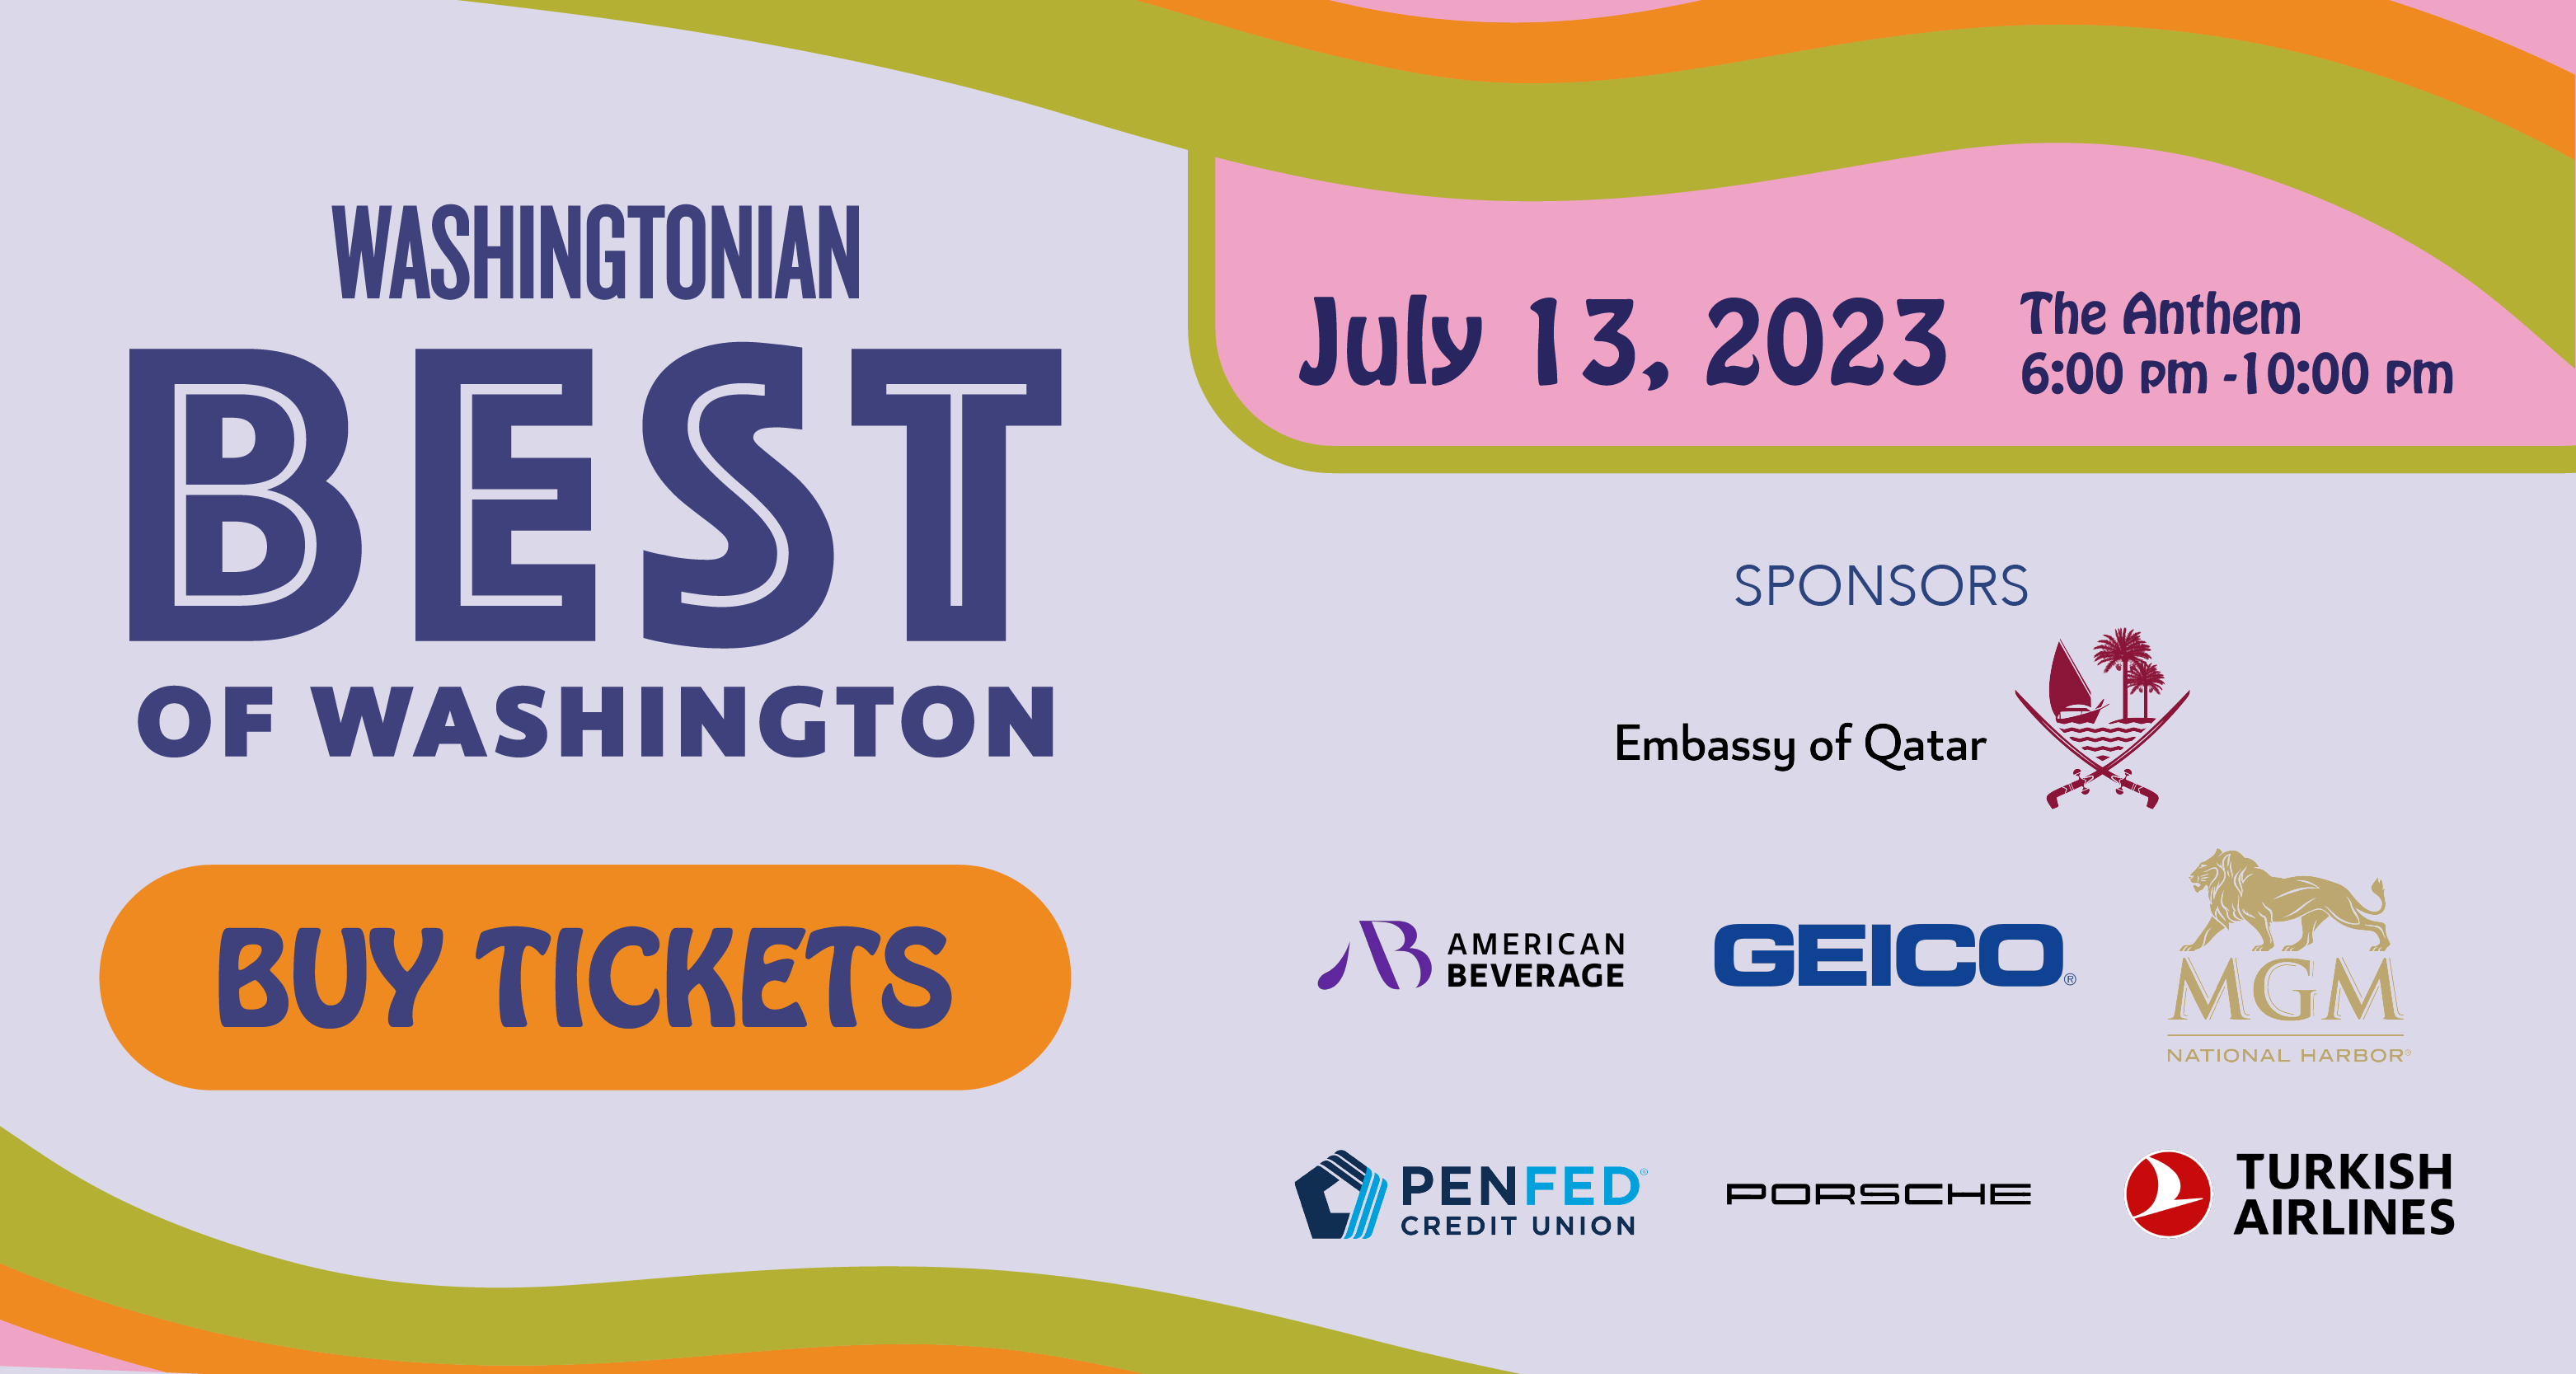 Capitol Communicator reports that Washingtonian magazine will hold its Best of Washington event on July 13, 2023.